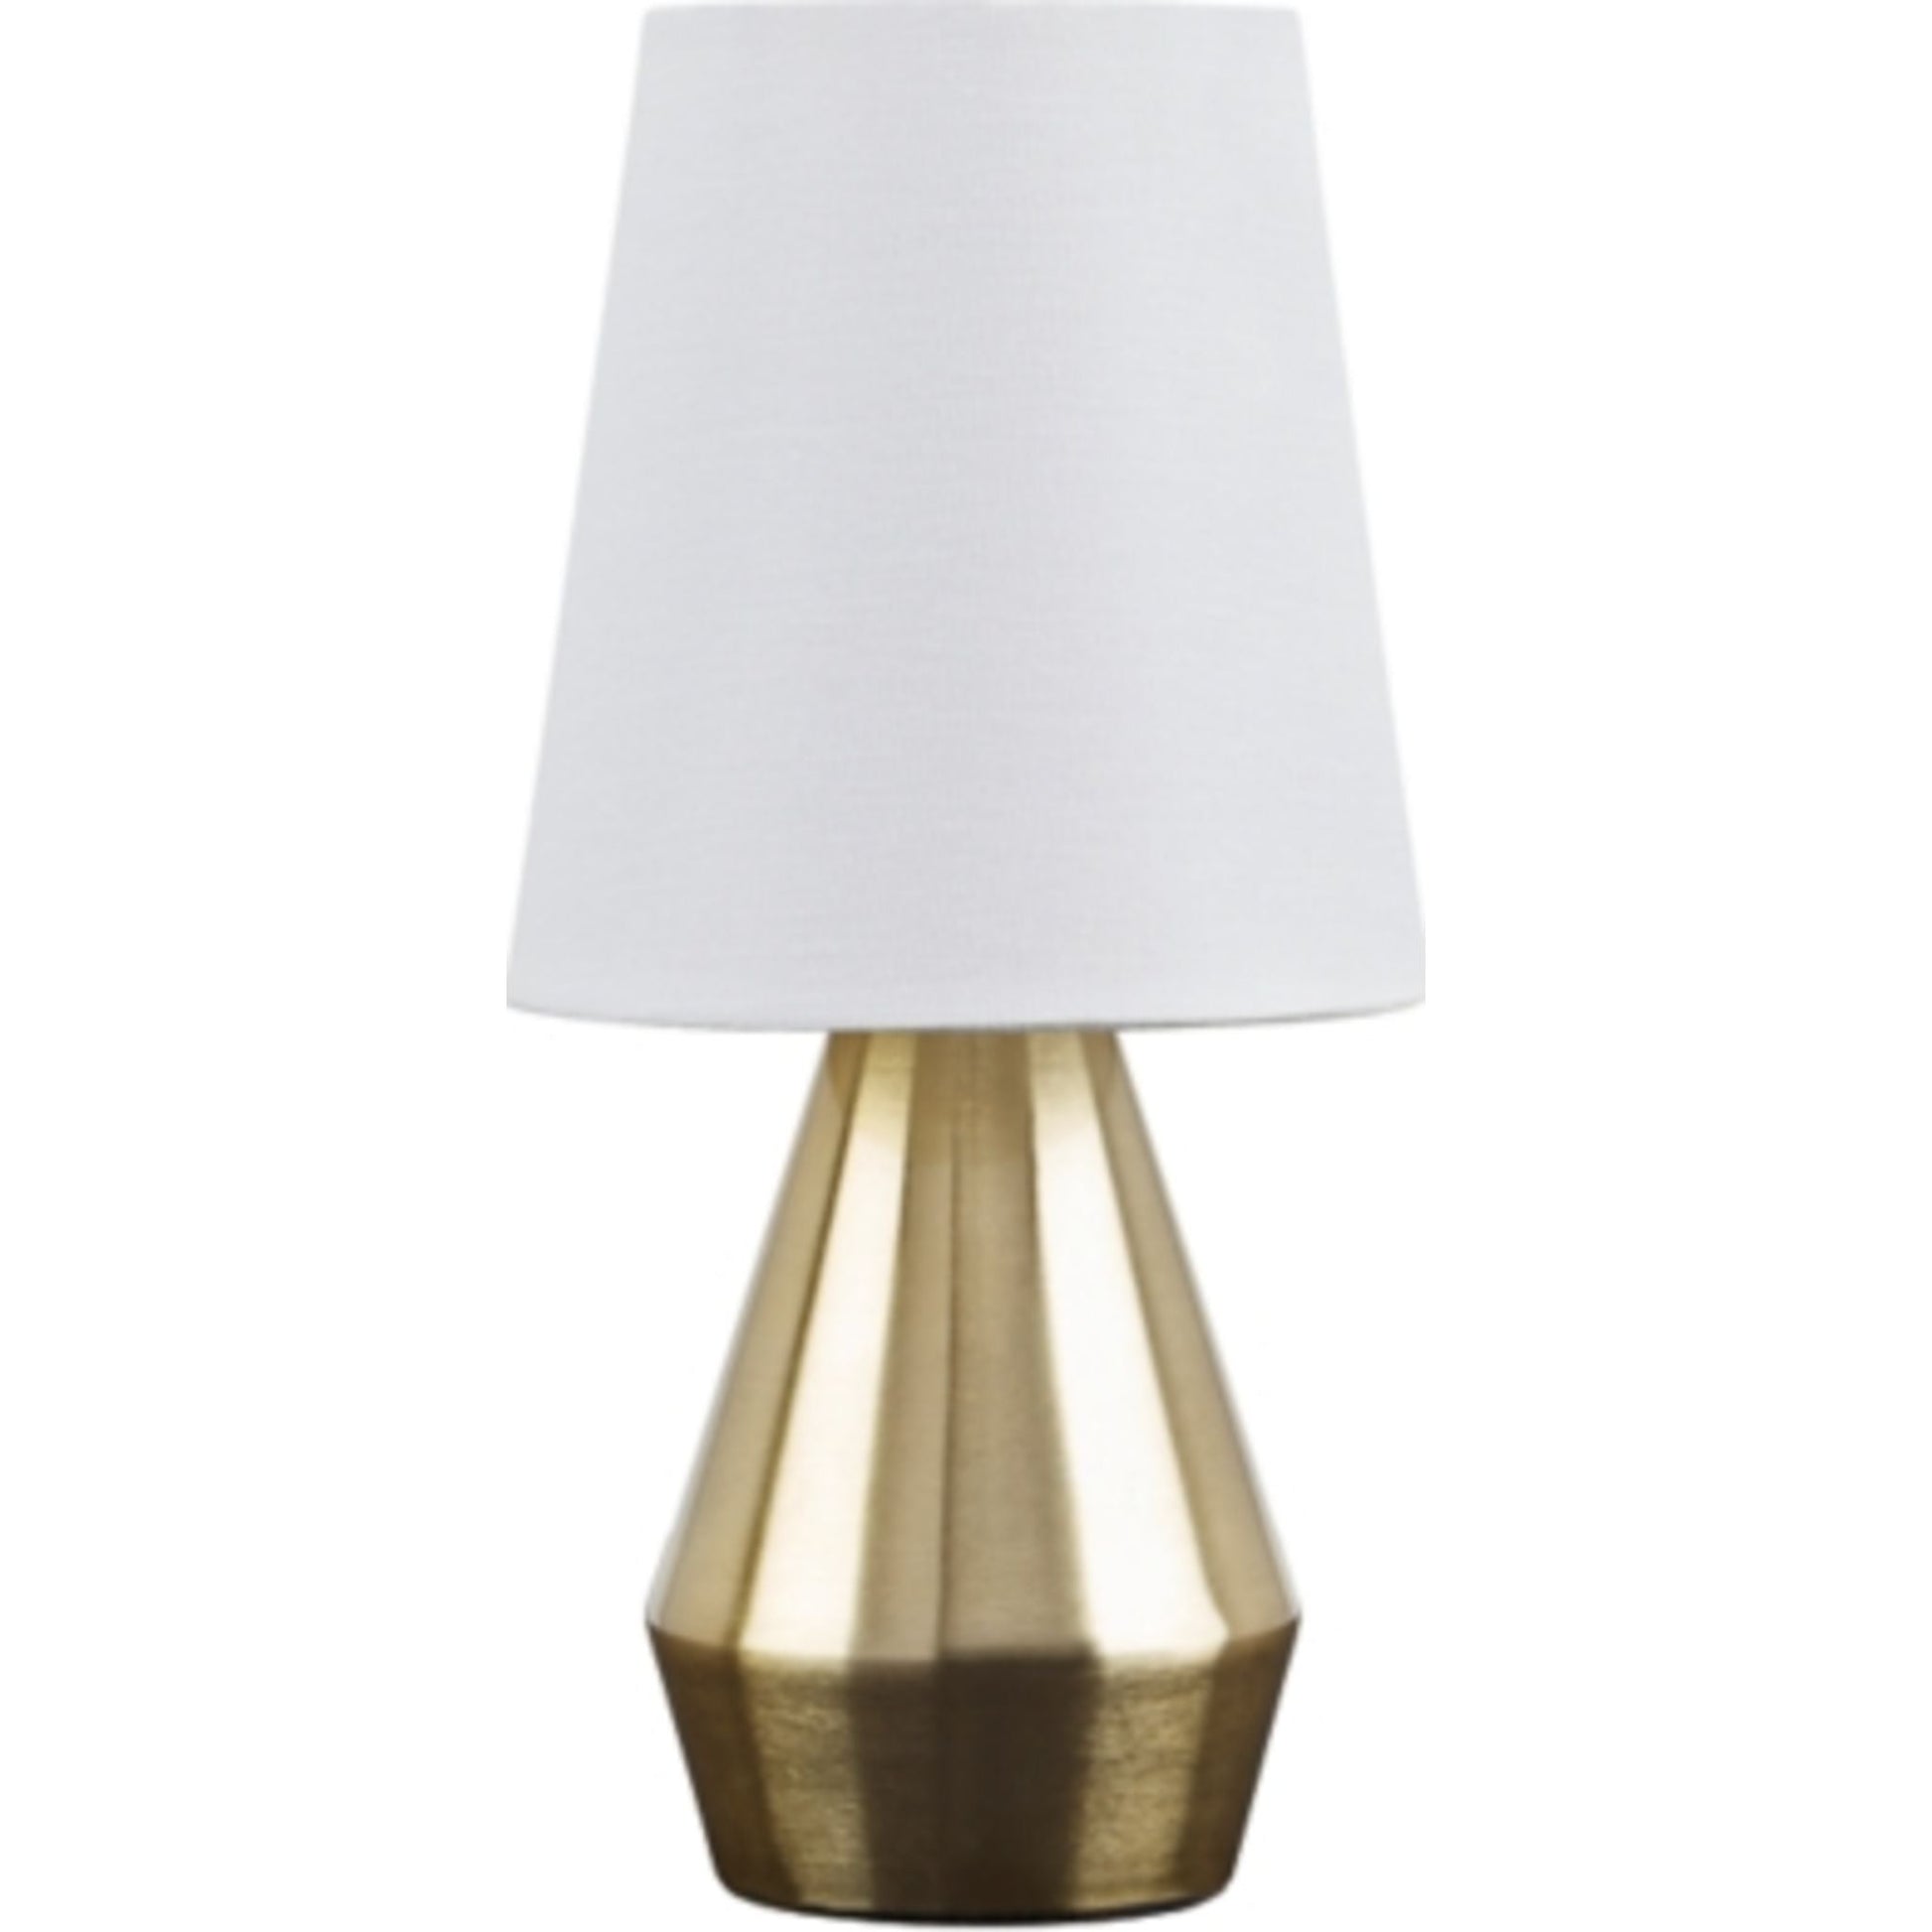 Lanry Table Lamp 14.50"